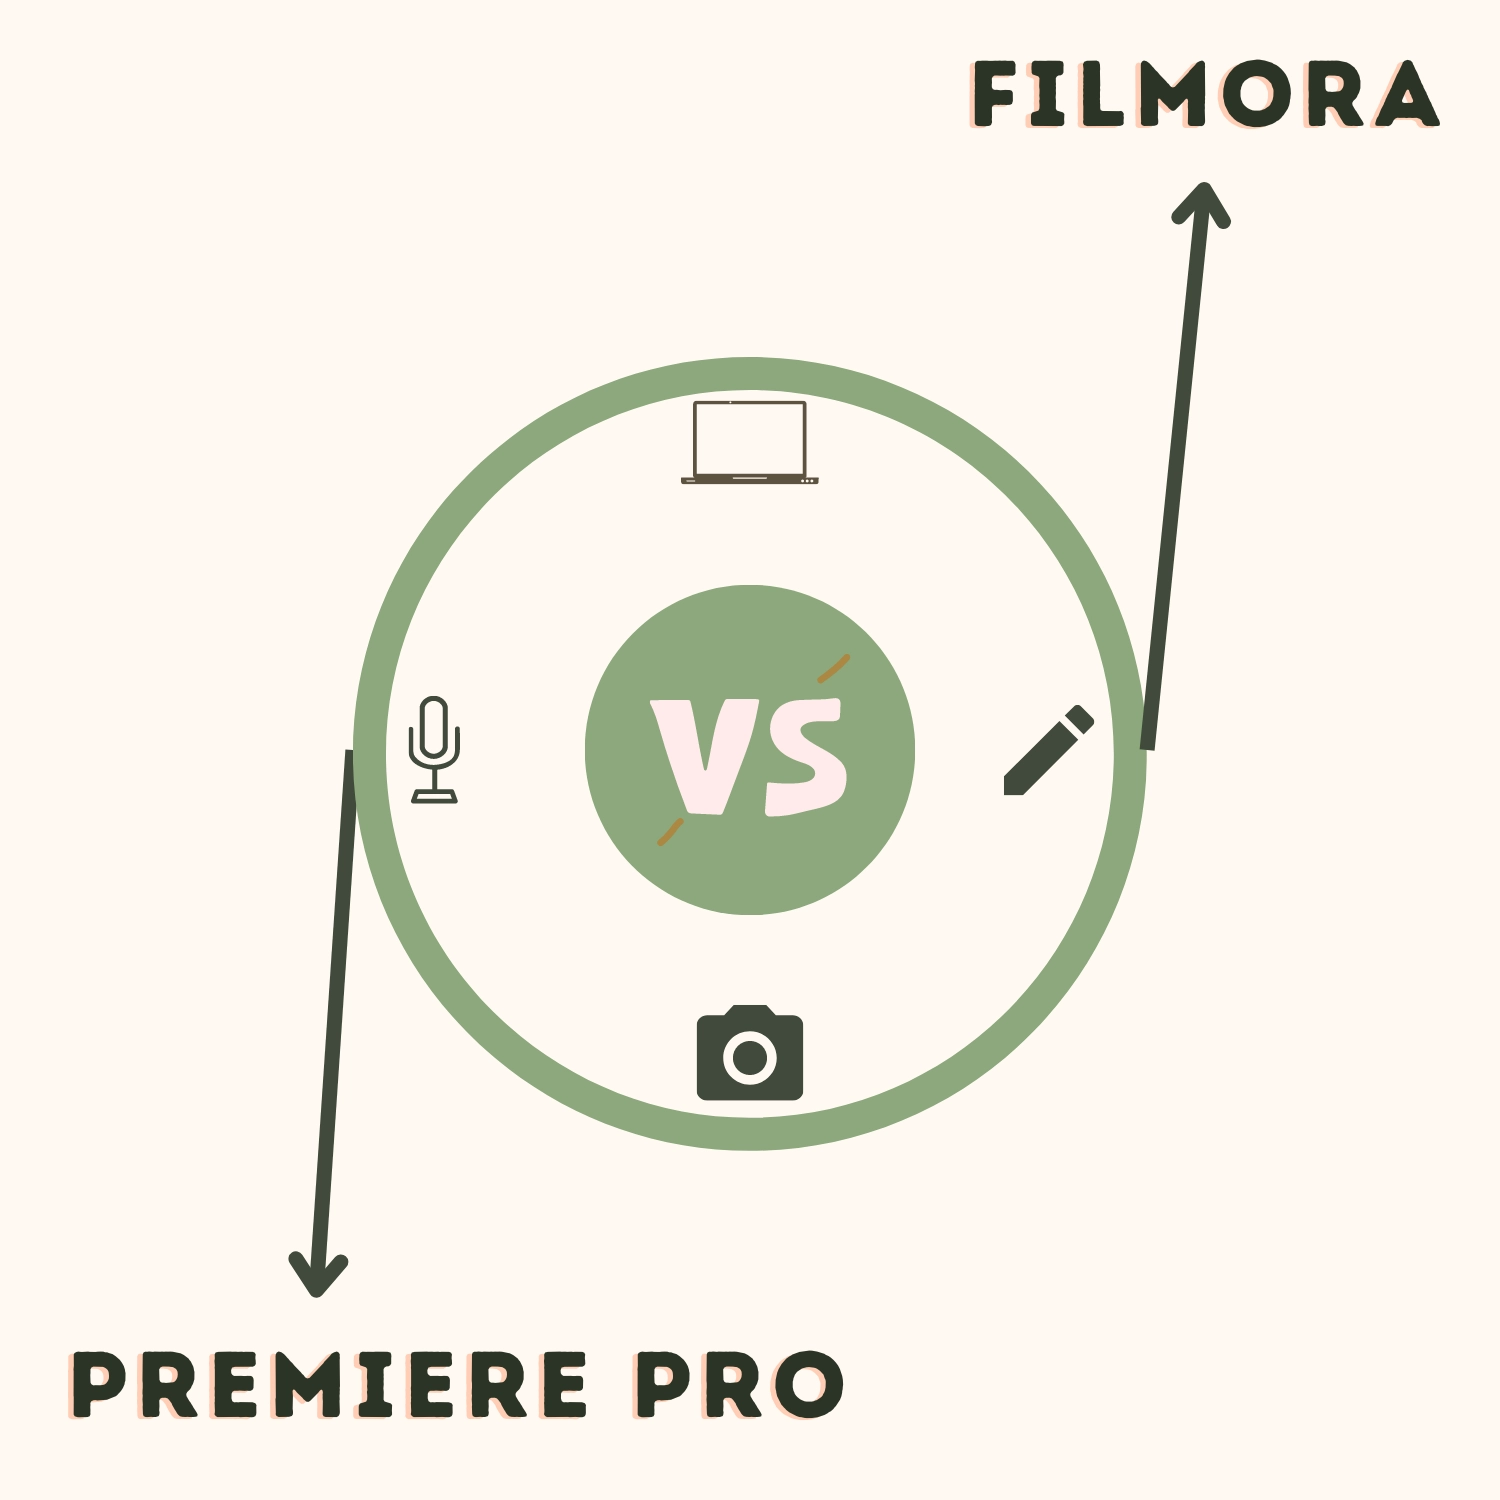 Filmora vs. Premiere Pro - The Best Video Editor of the Year